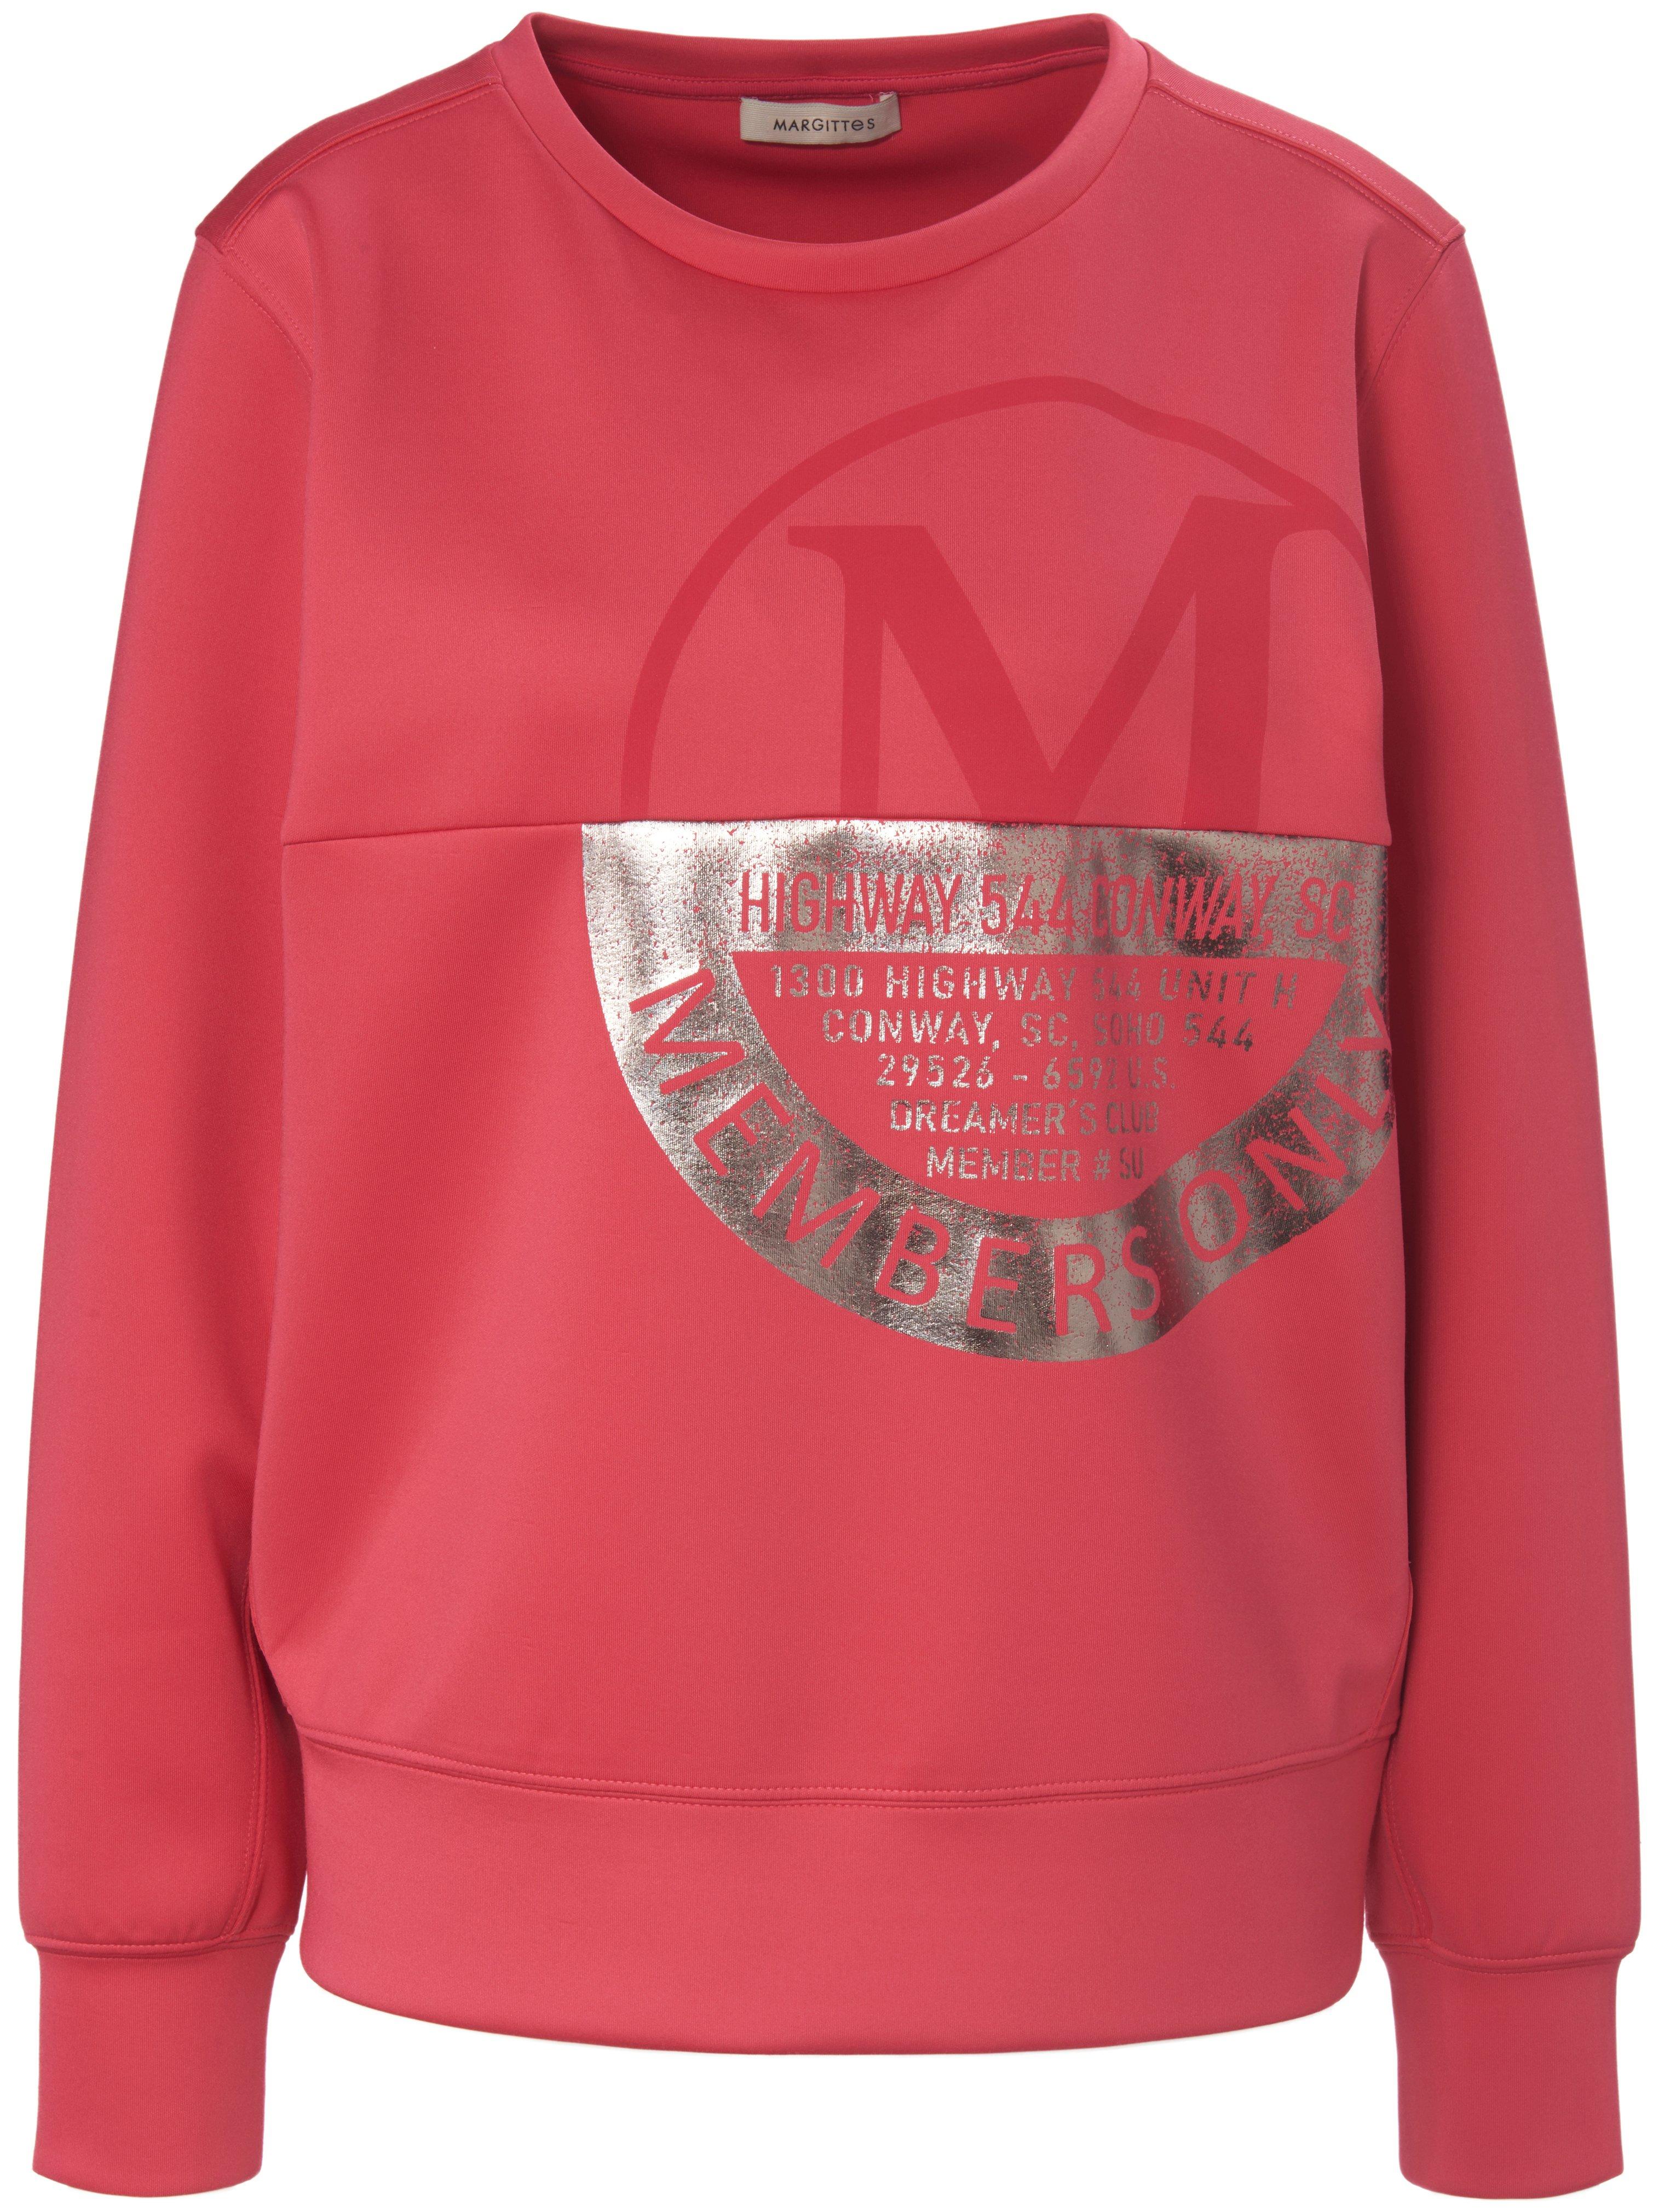 Sweatshirt Van Margittes pink